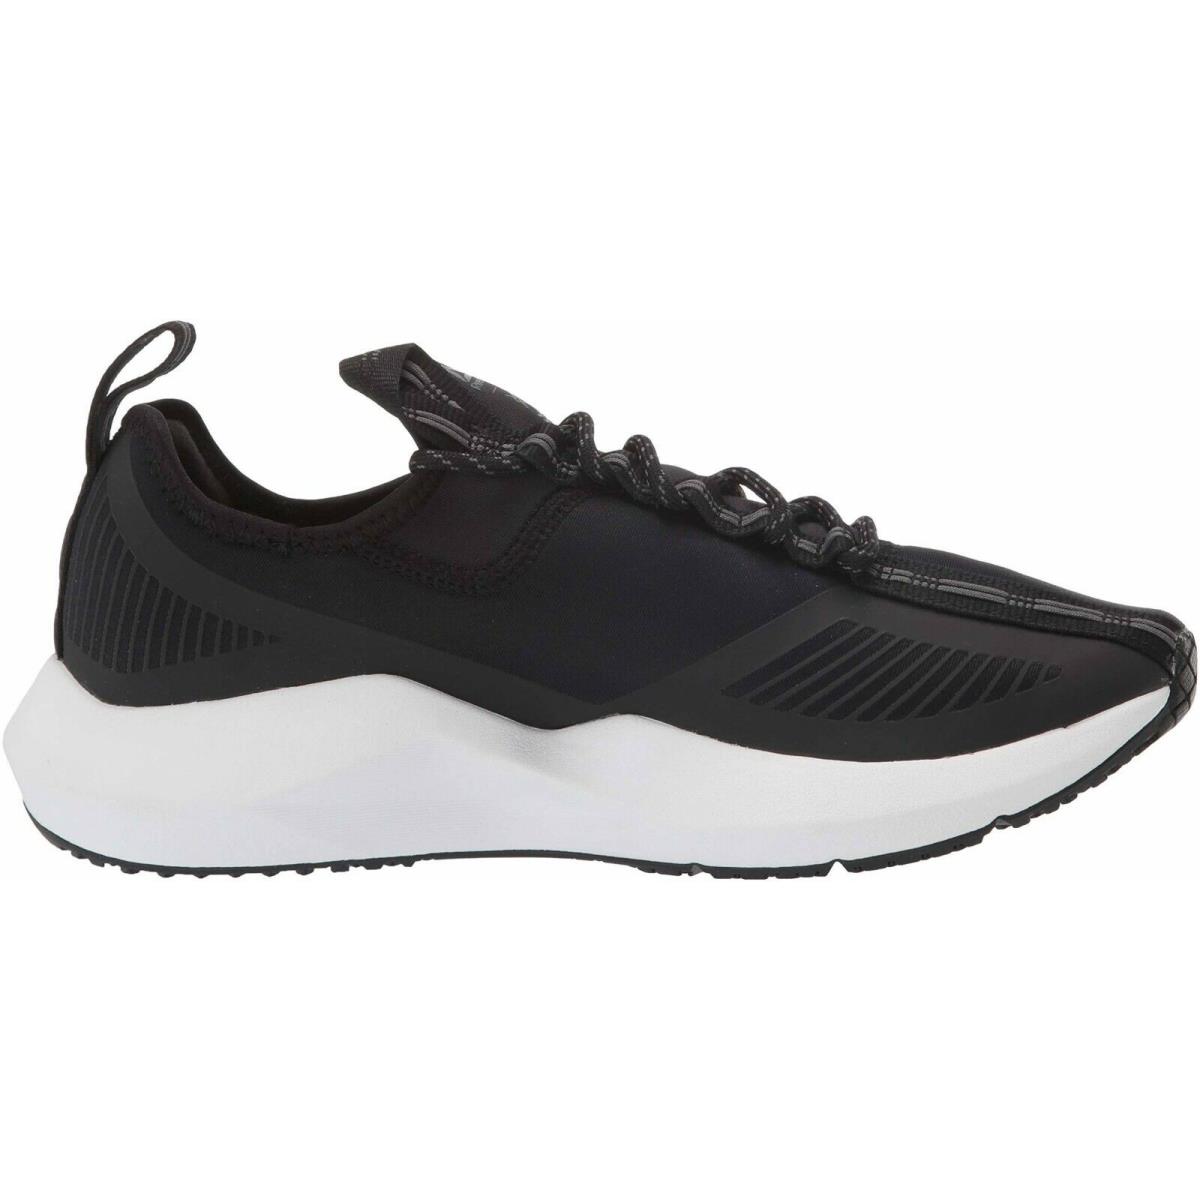 Reebok Sole Fury TS Men s Running Shoes Size 13 Eur 47 UK 12 Black